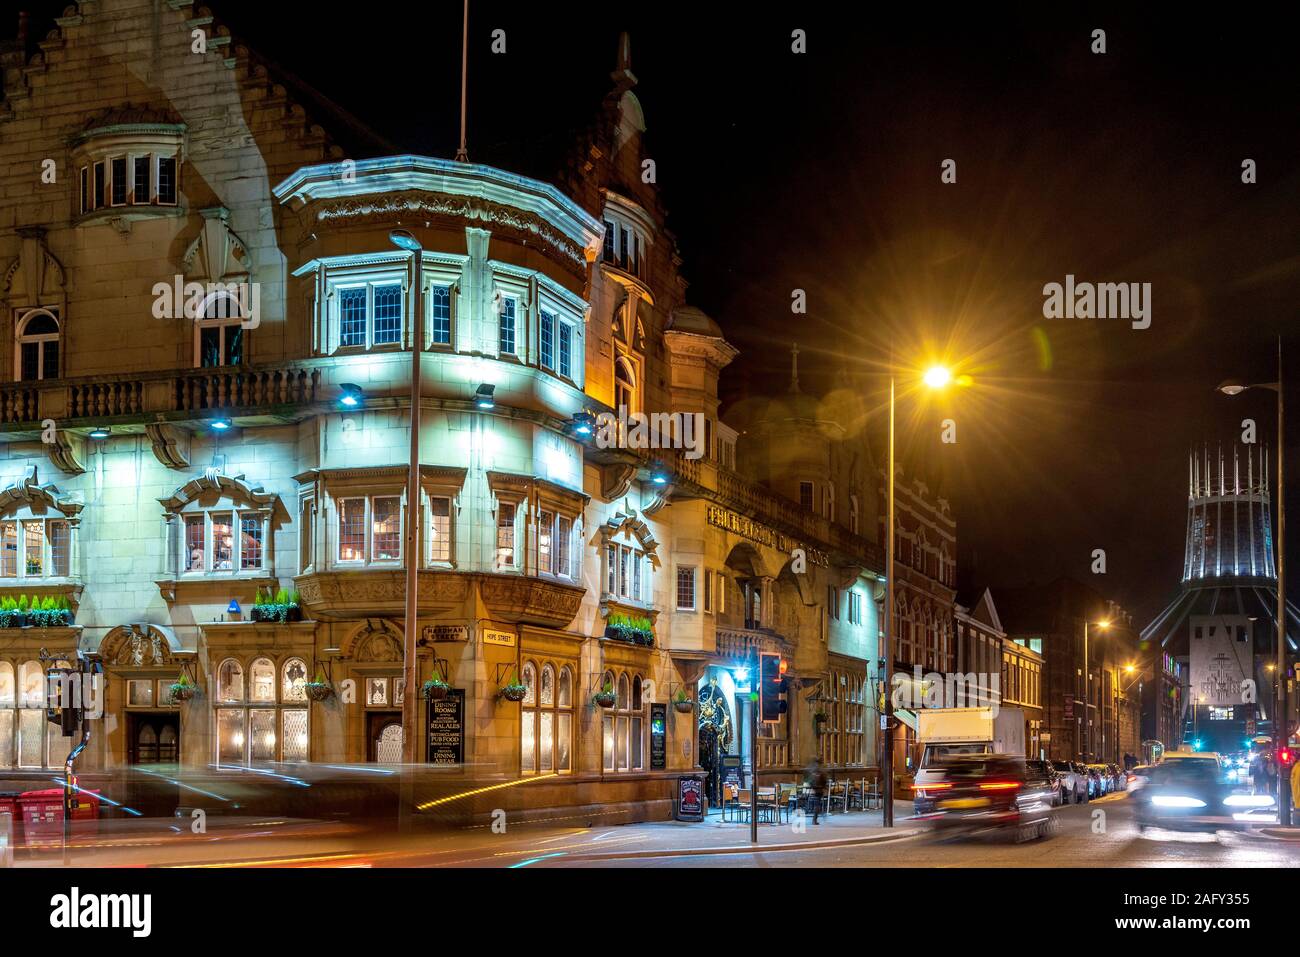 Liverpool Philharmonic pub on Hope Street at night. Stock Photo